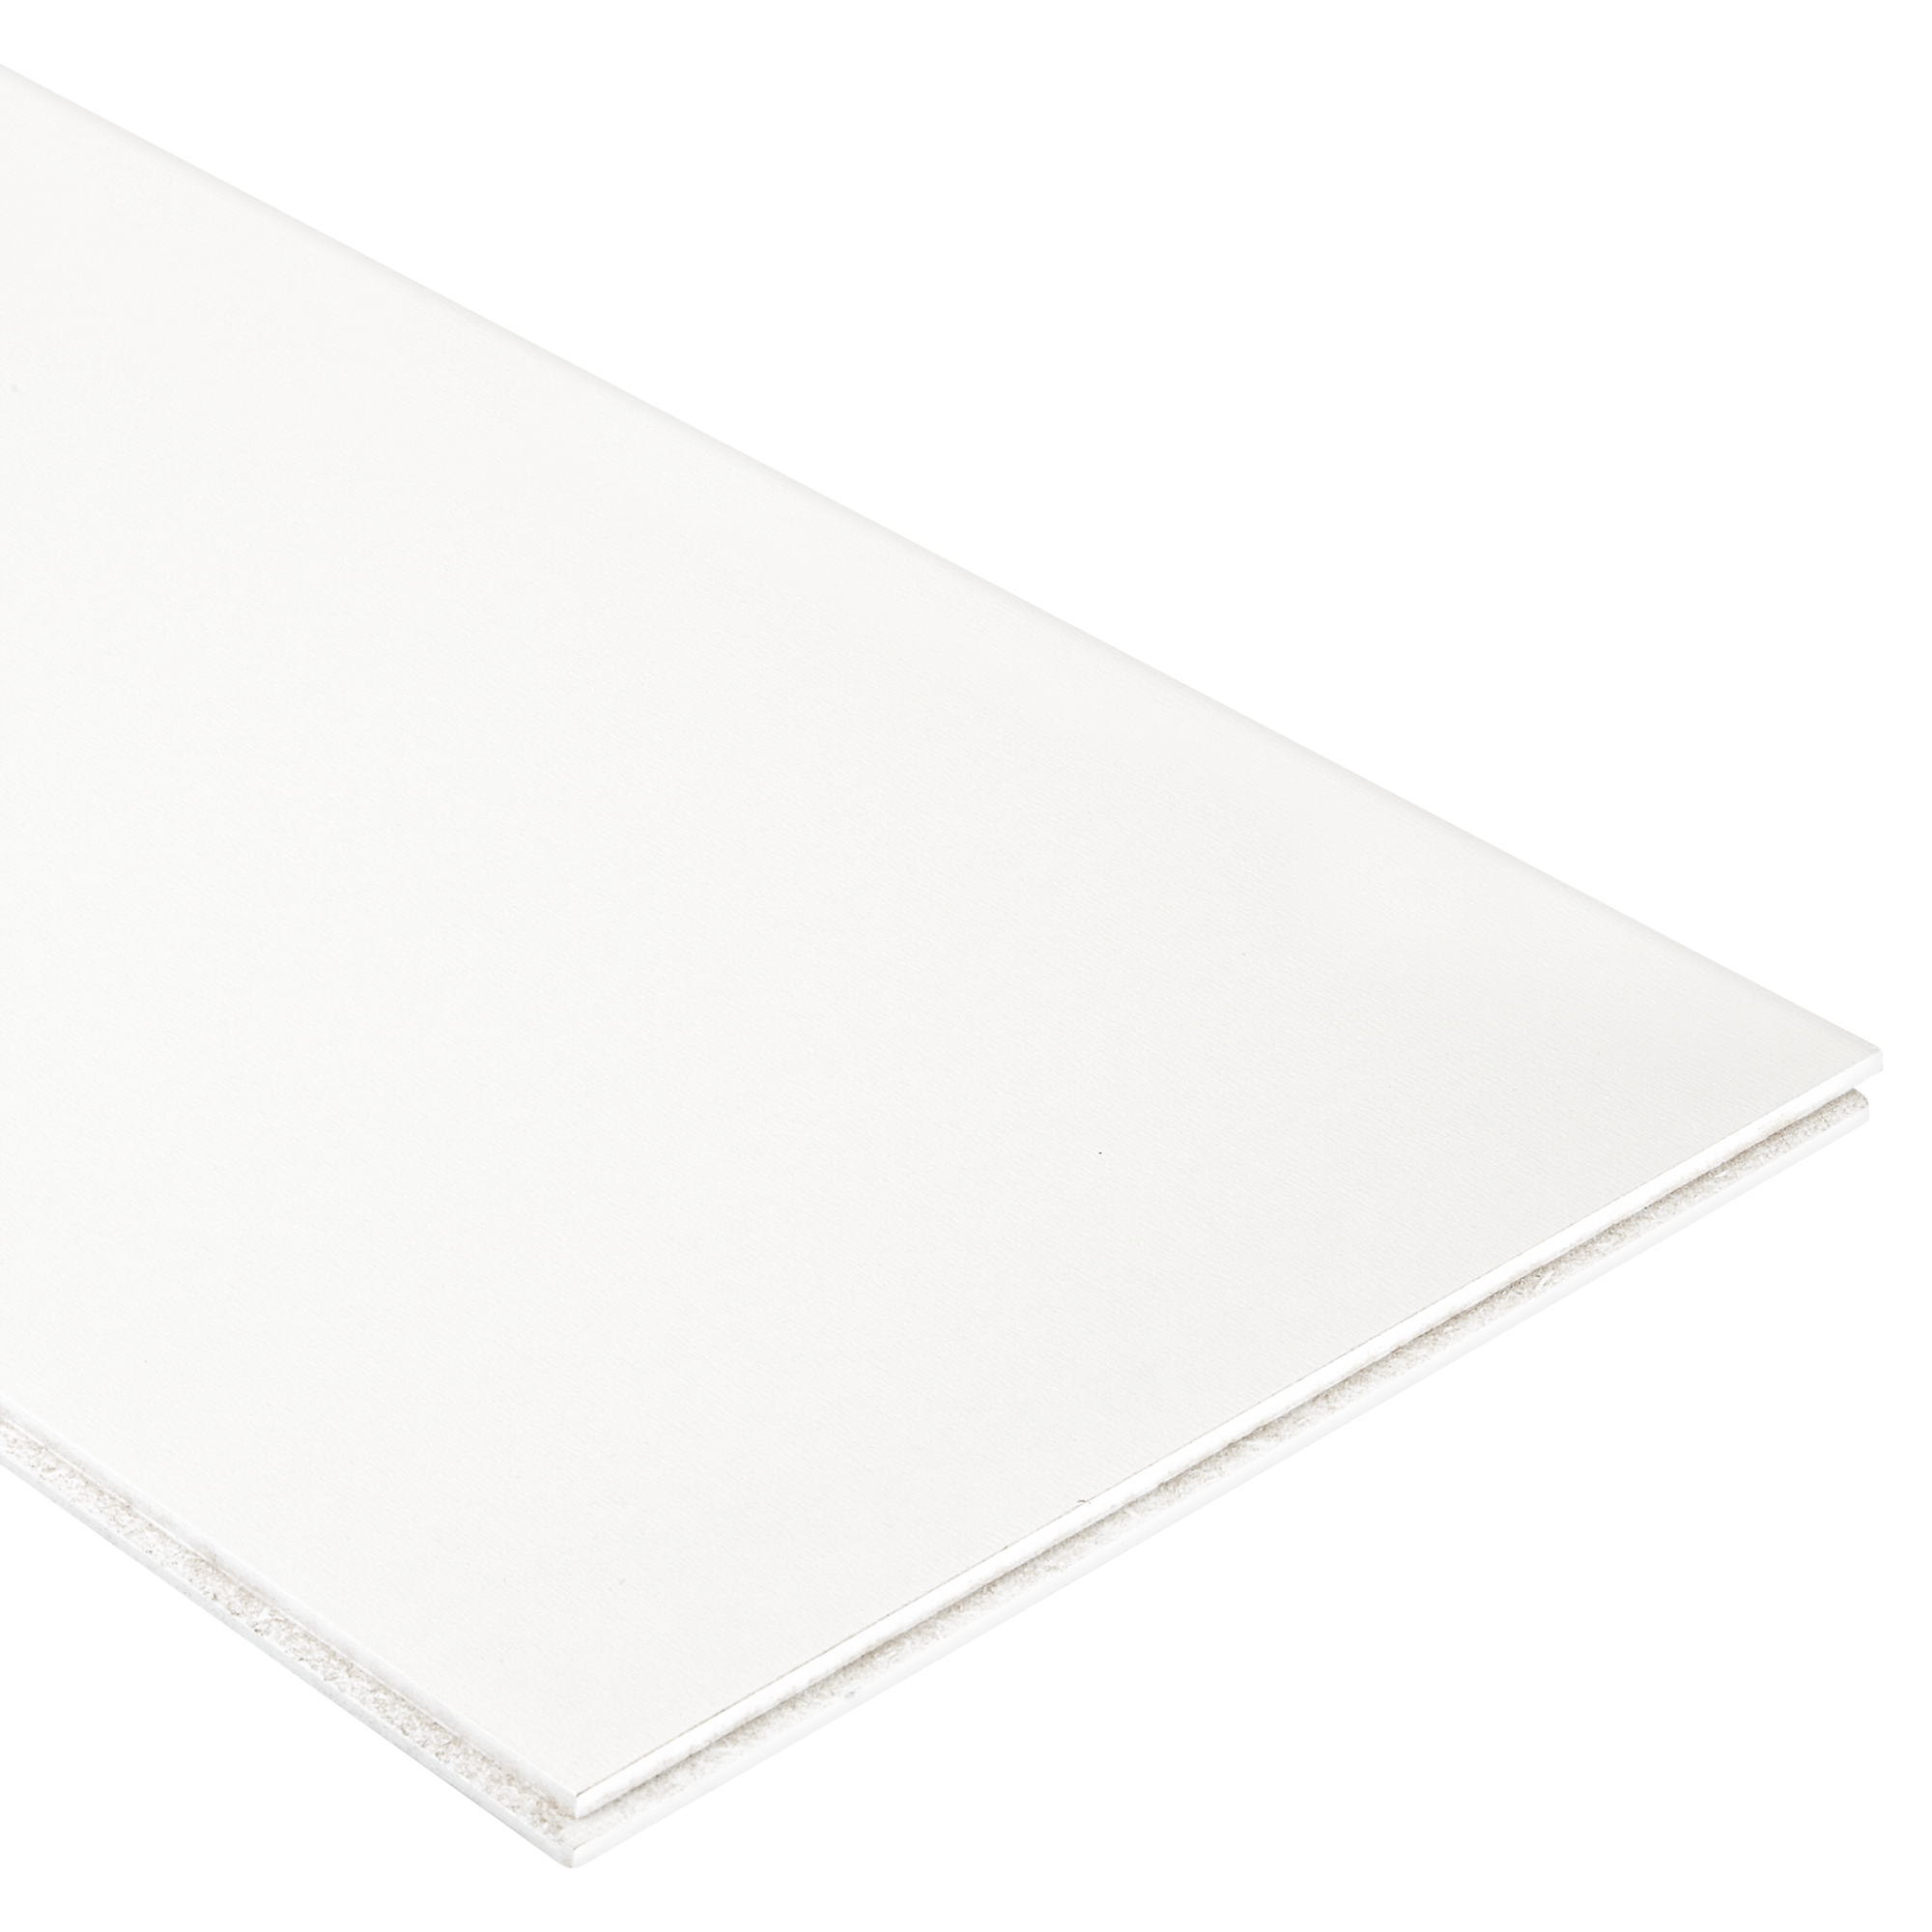 Lackpaneele 'Varnea' weiß 1,2 x 29 x 130 cm, 6 Stück + product picture